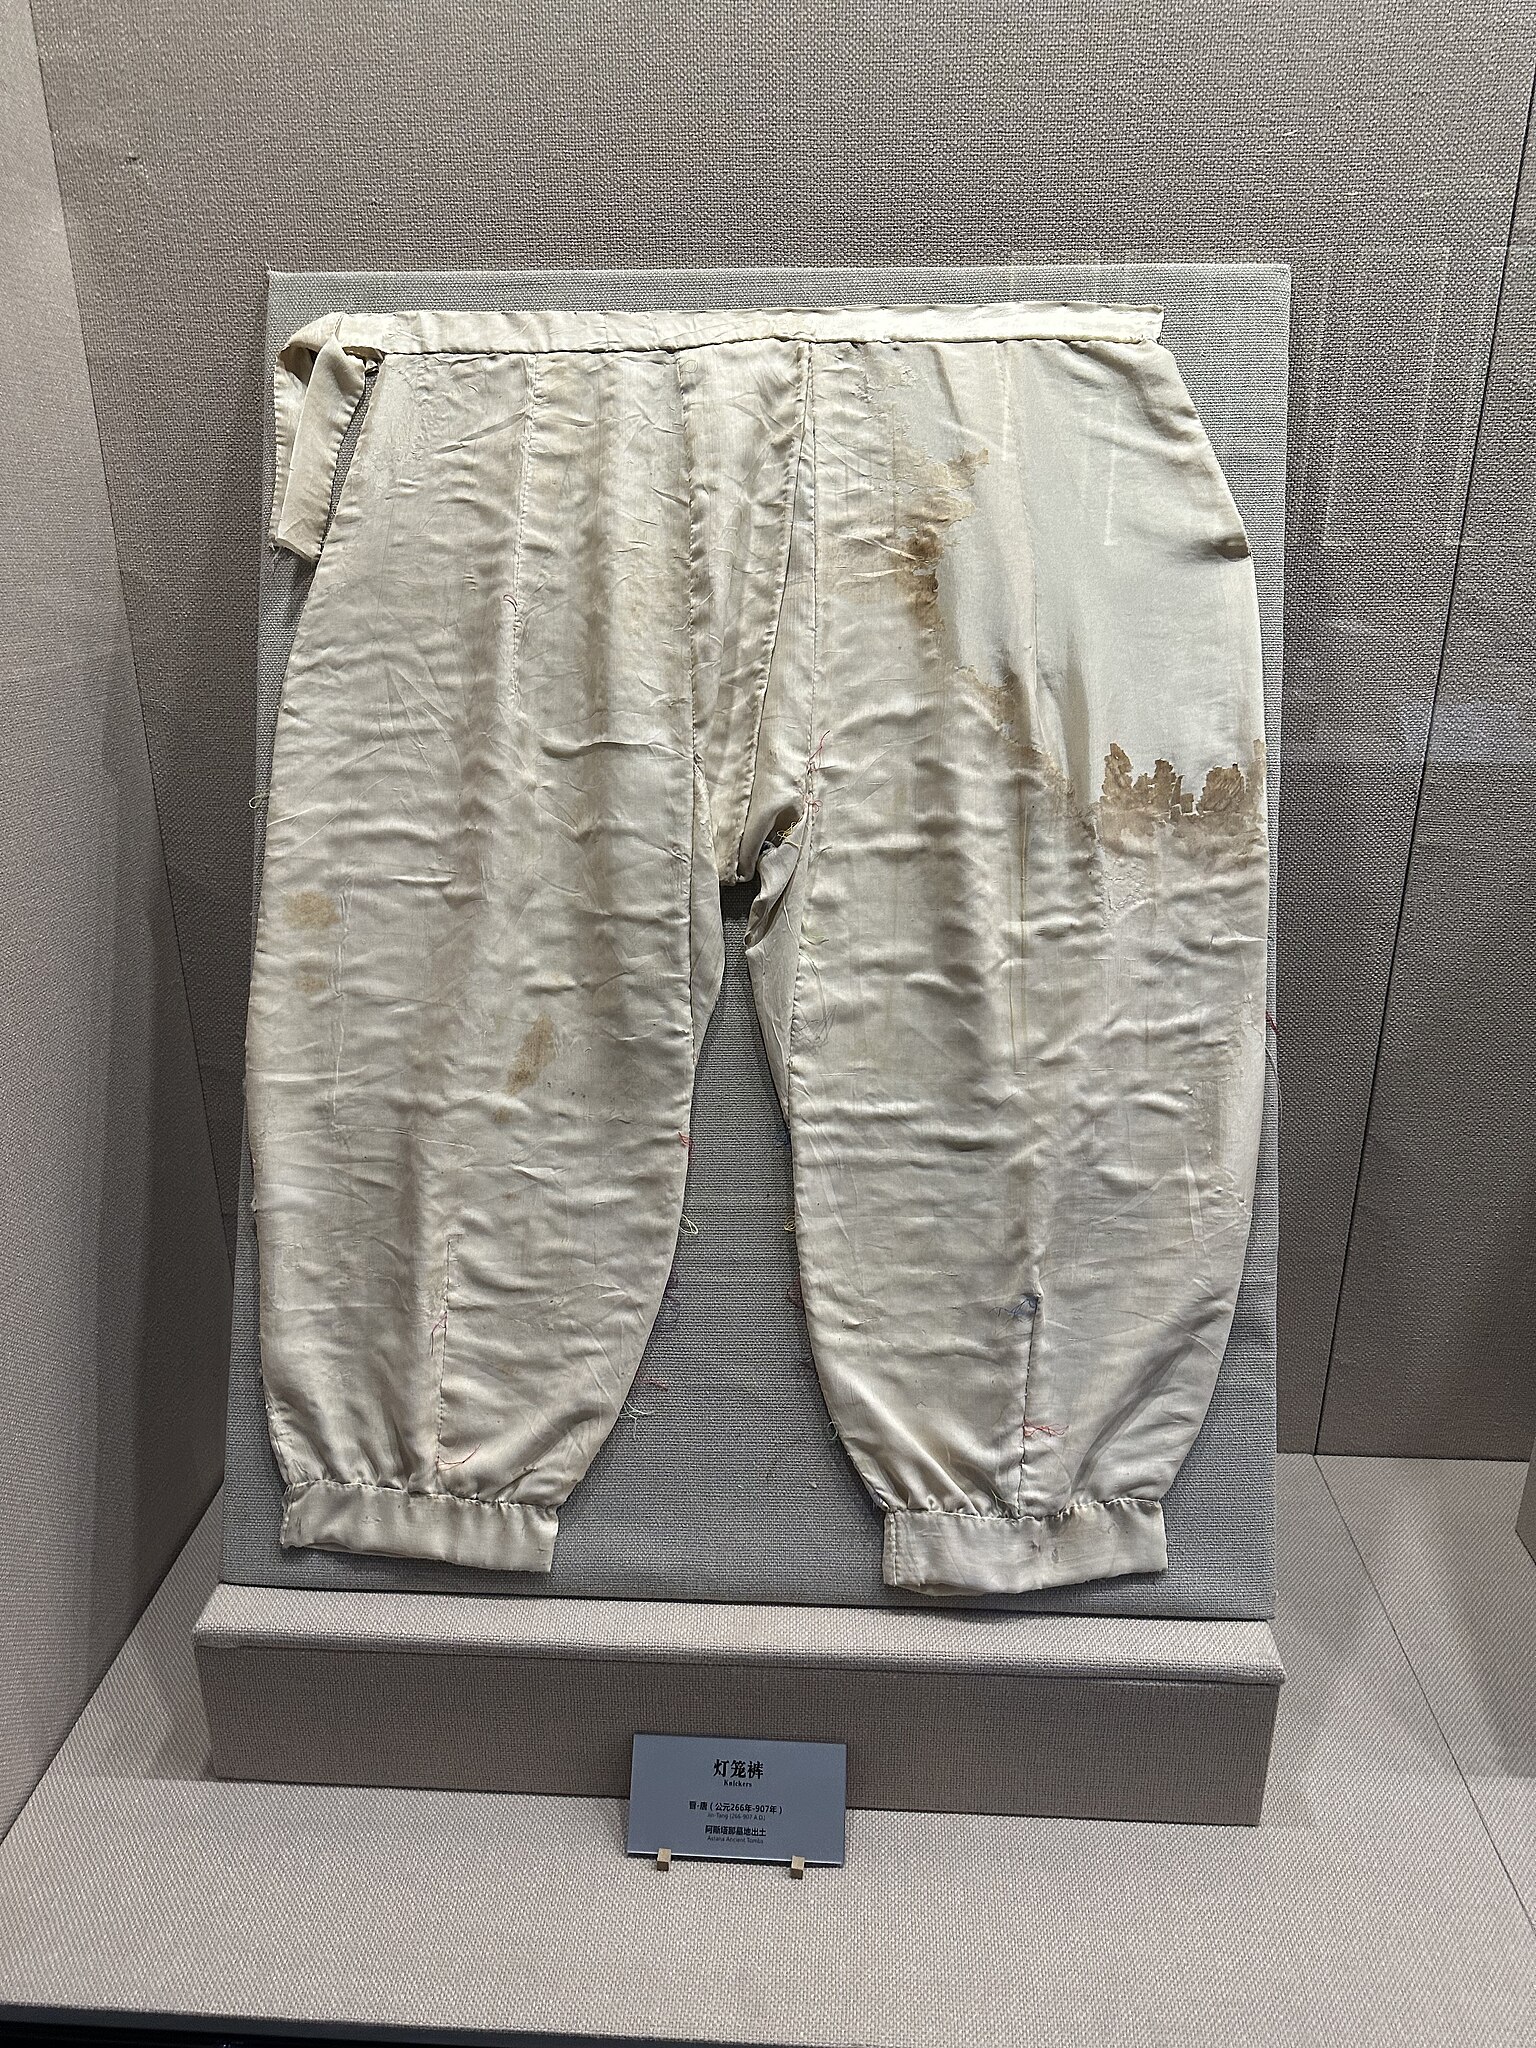 File:吐鲁番博物馆展出阿斯塔那古墓群出土的灯笼裤.jpg - Wikipedia